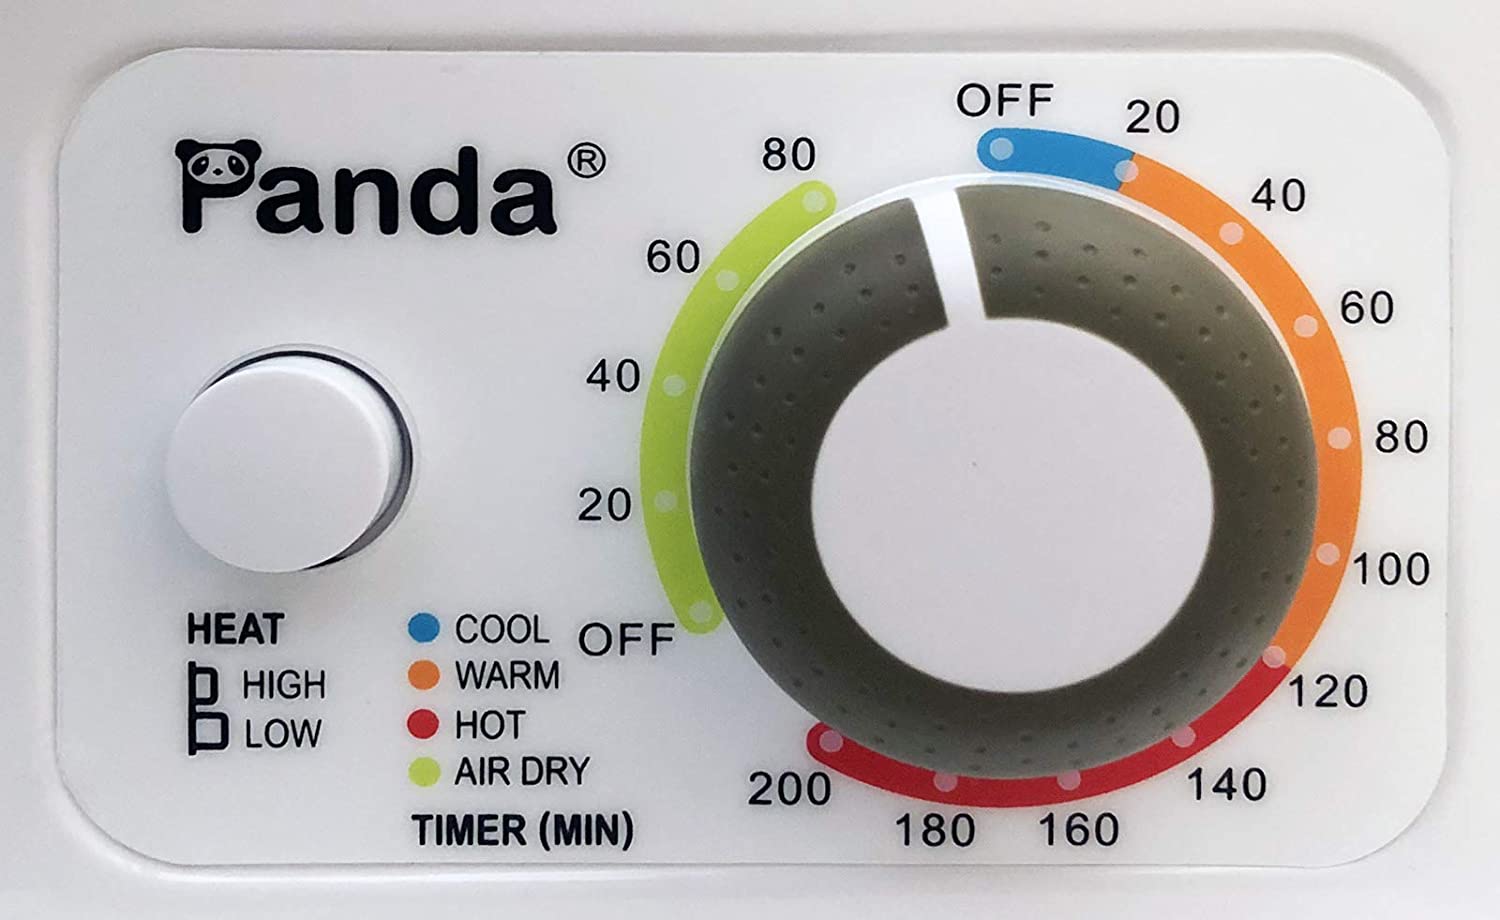 panda 110 volt dryer